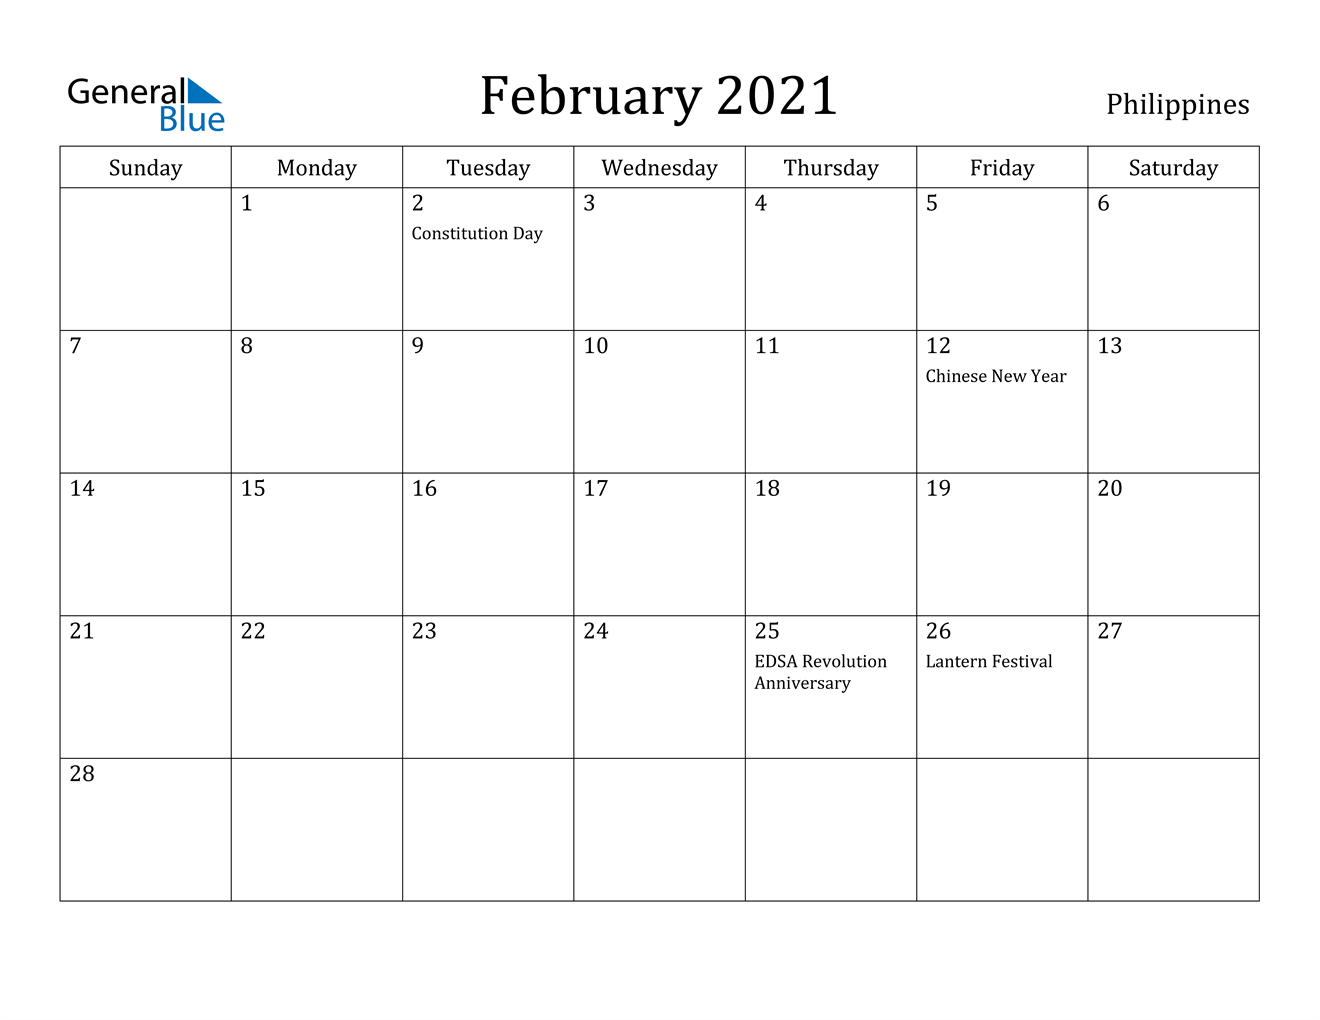 February 2021 Calendar - Philippines